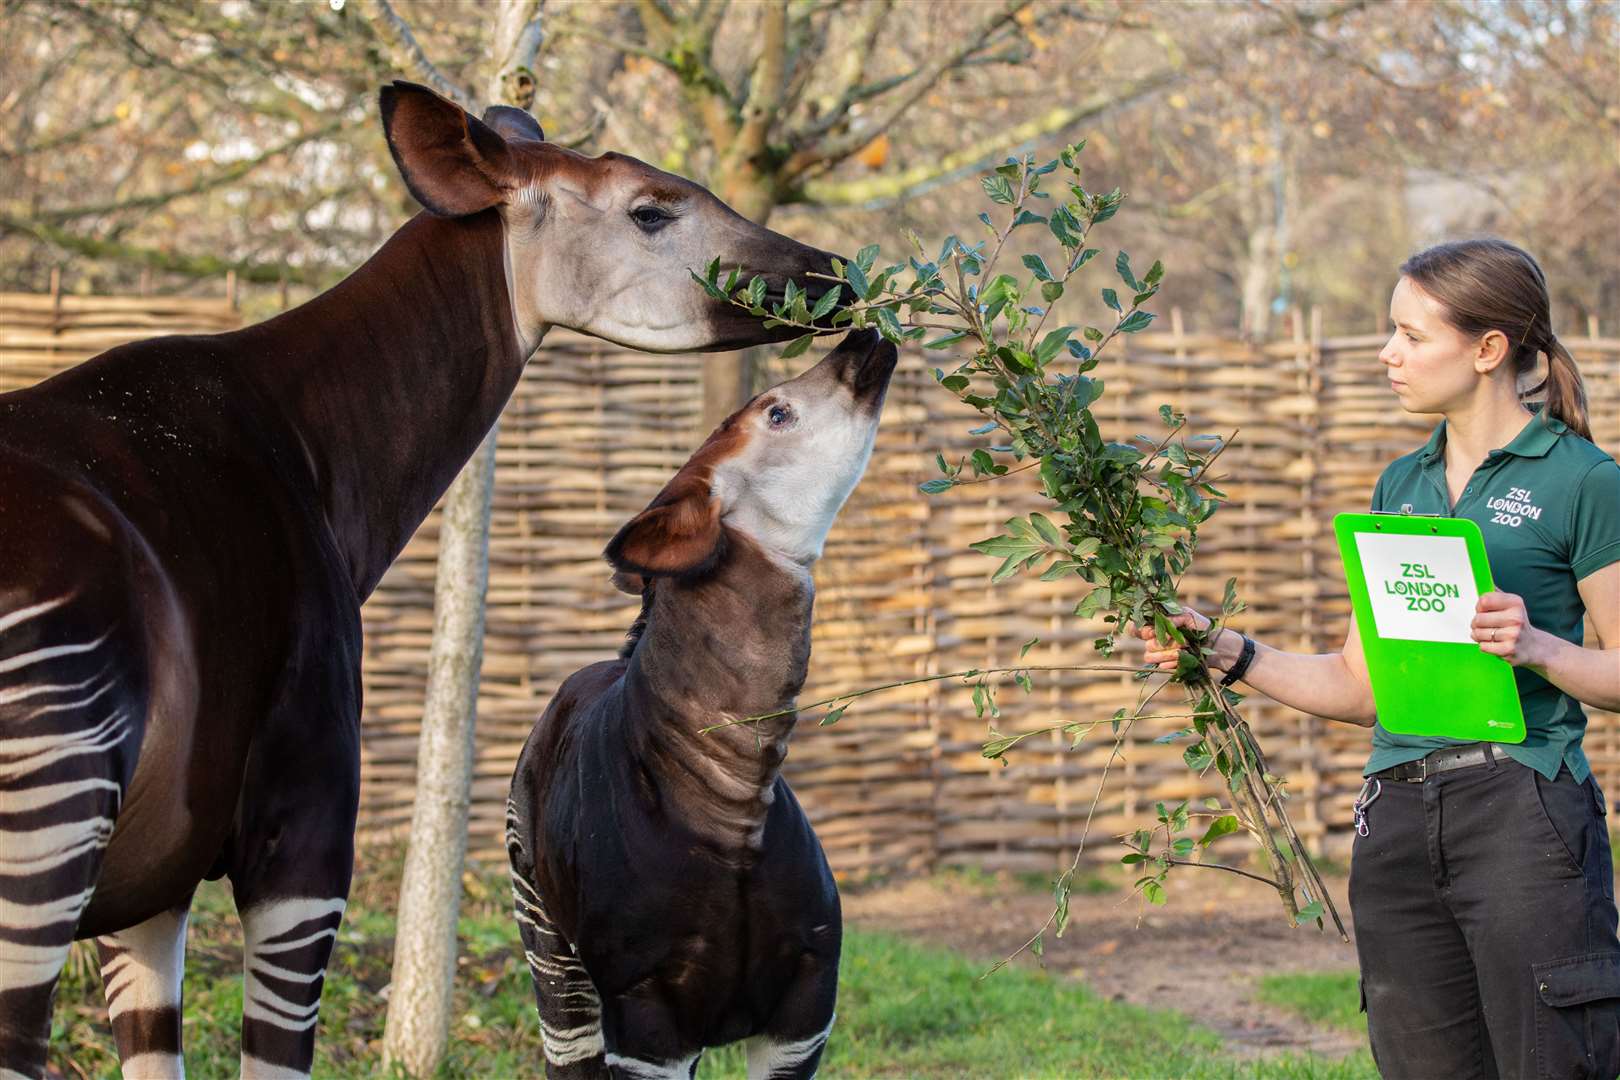 An Okapi calf was an addition in 2020 (ZSL London Zoo)